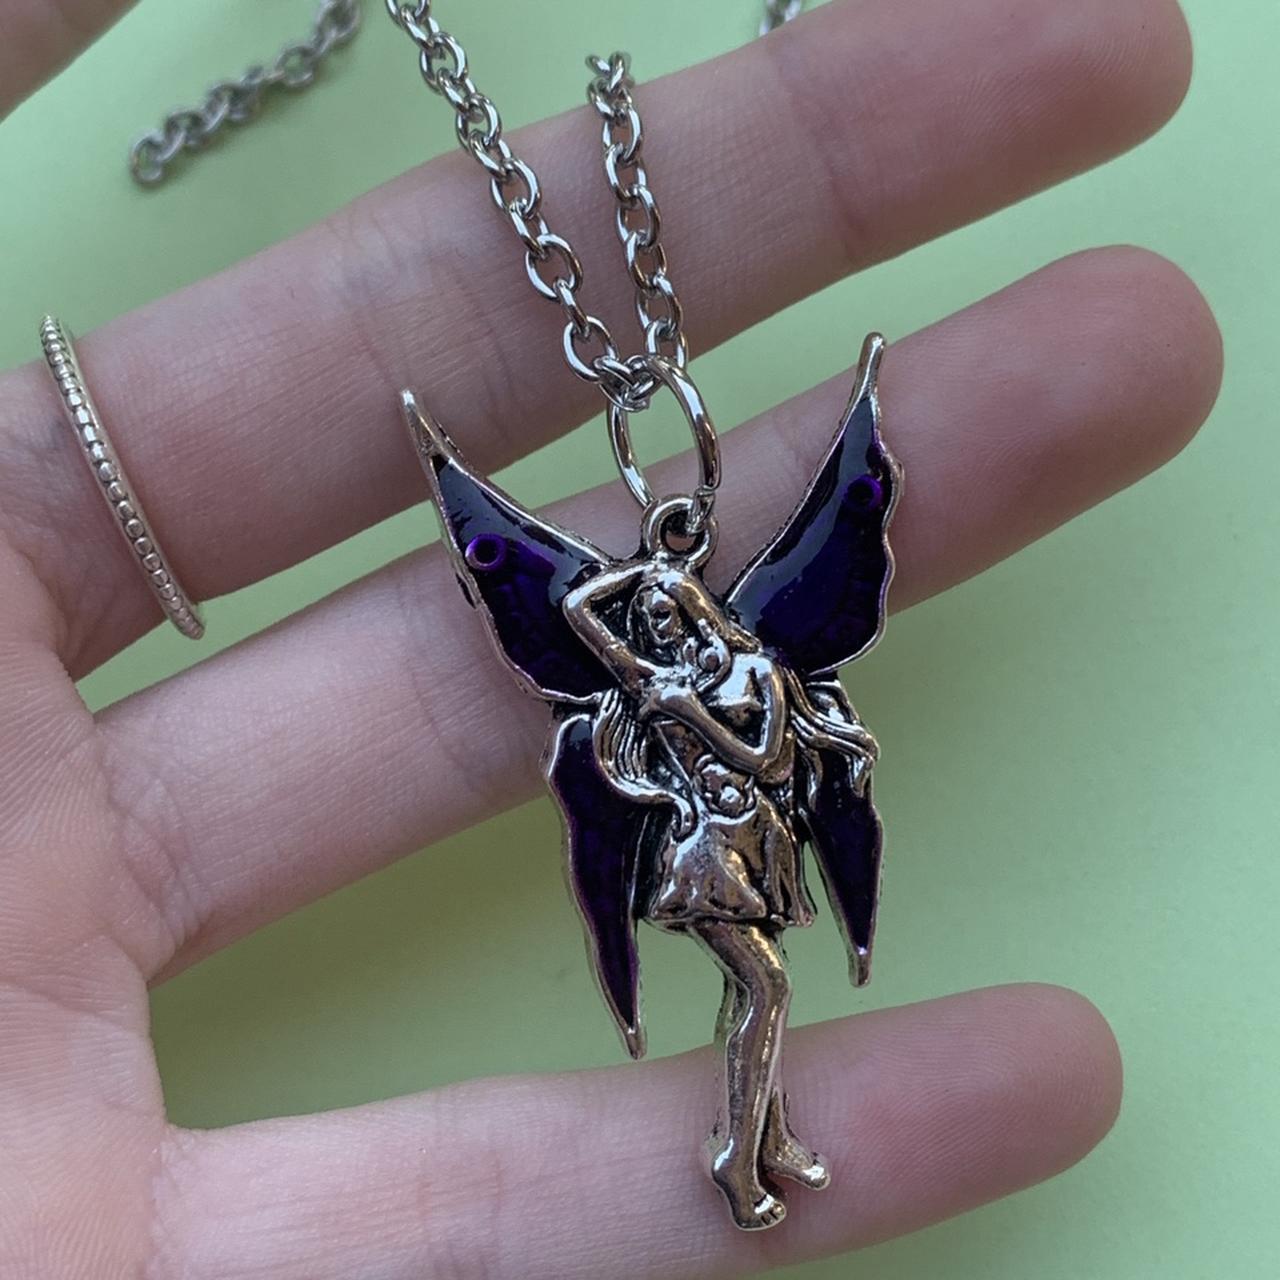 The purple fairy Chain necklace